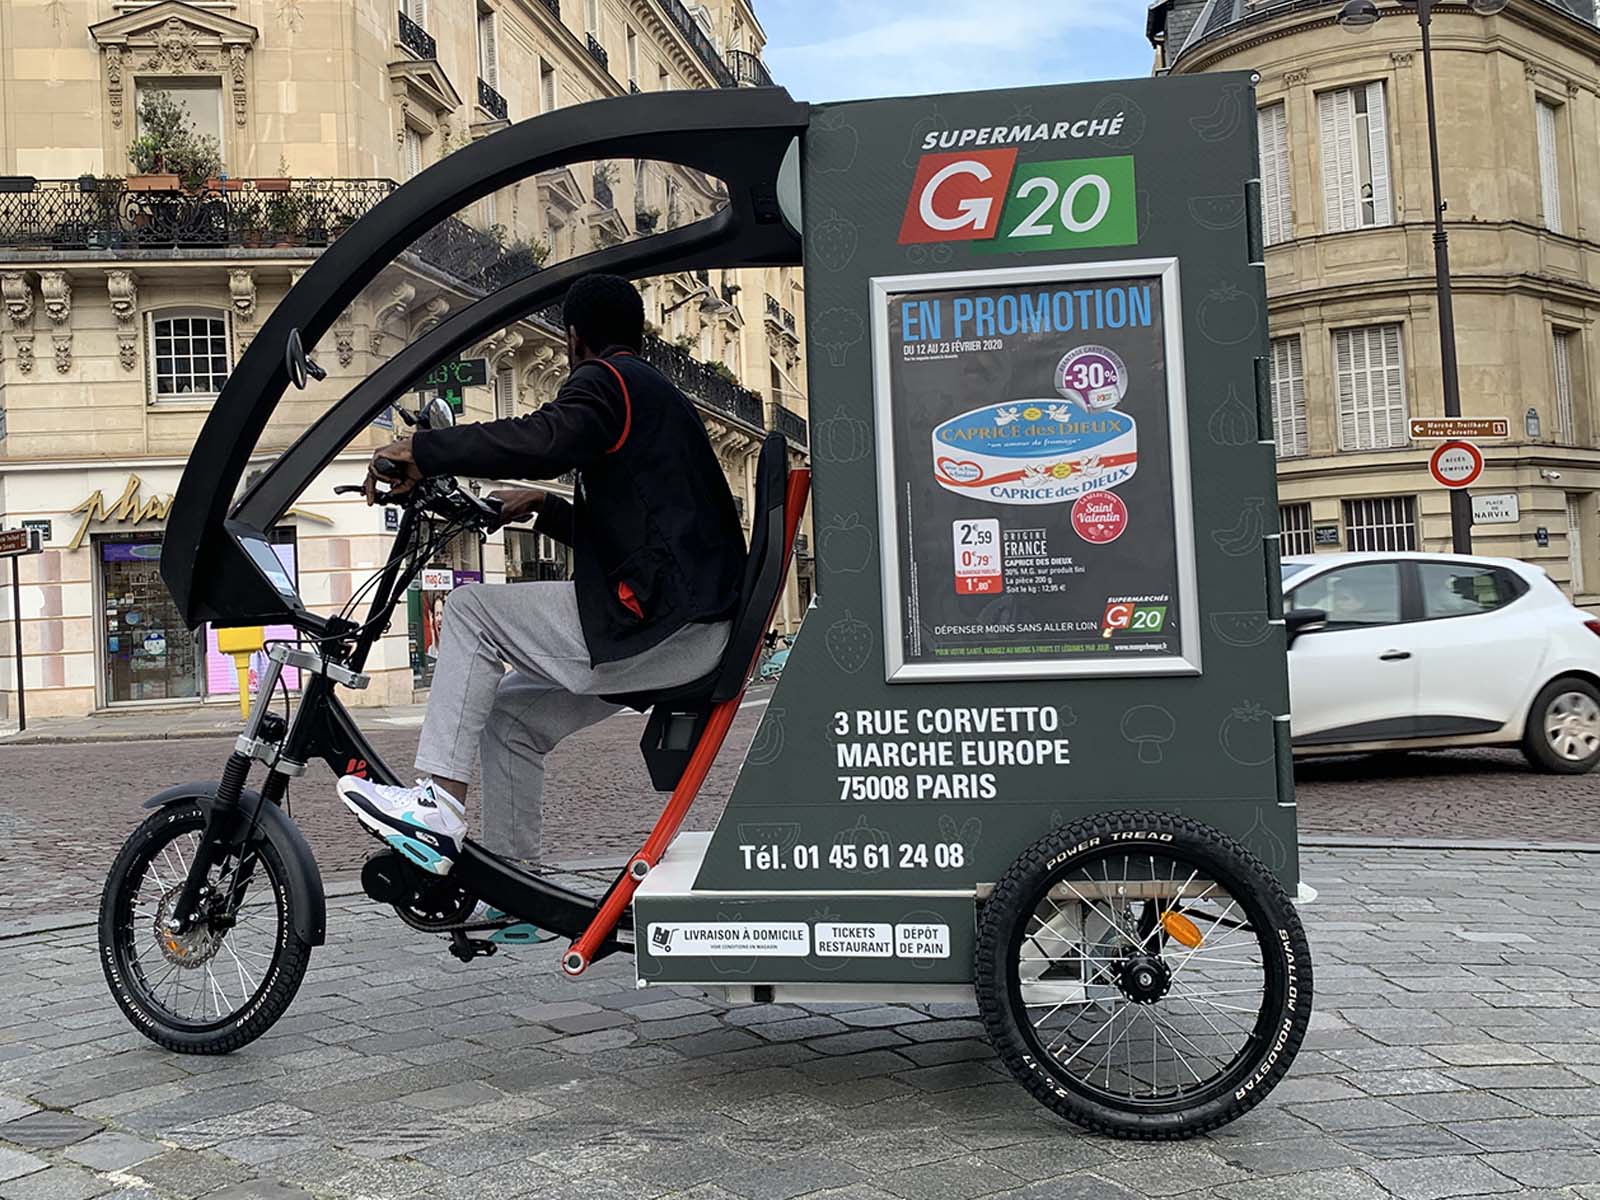 cargobike livraison G20